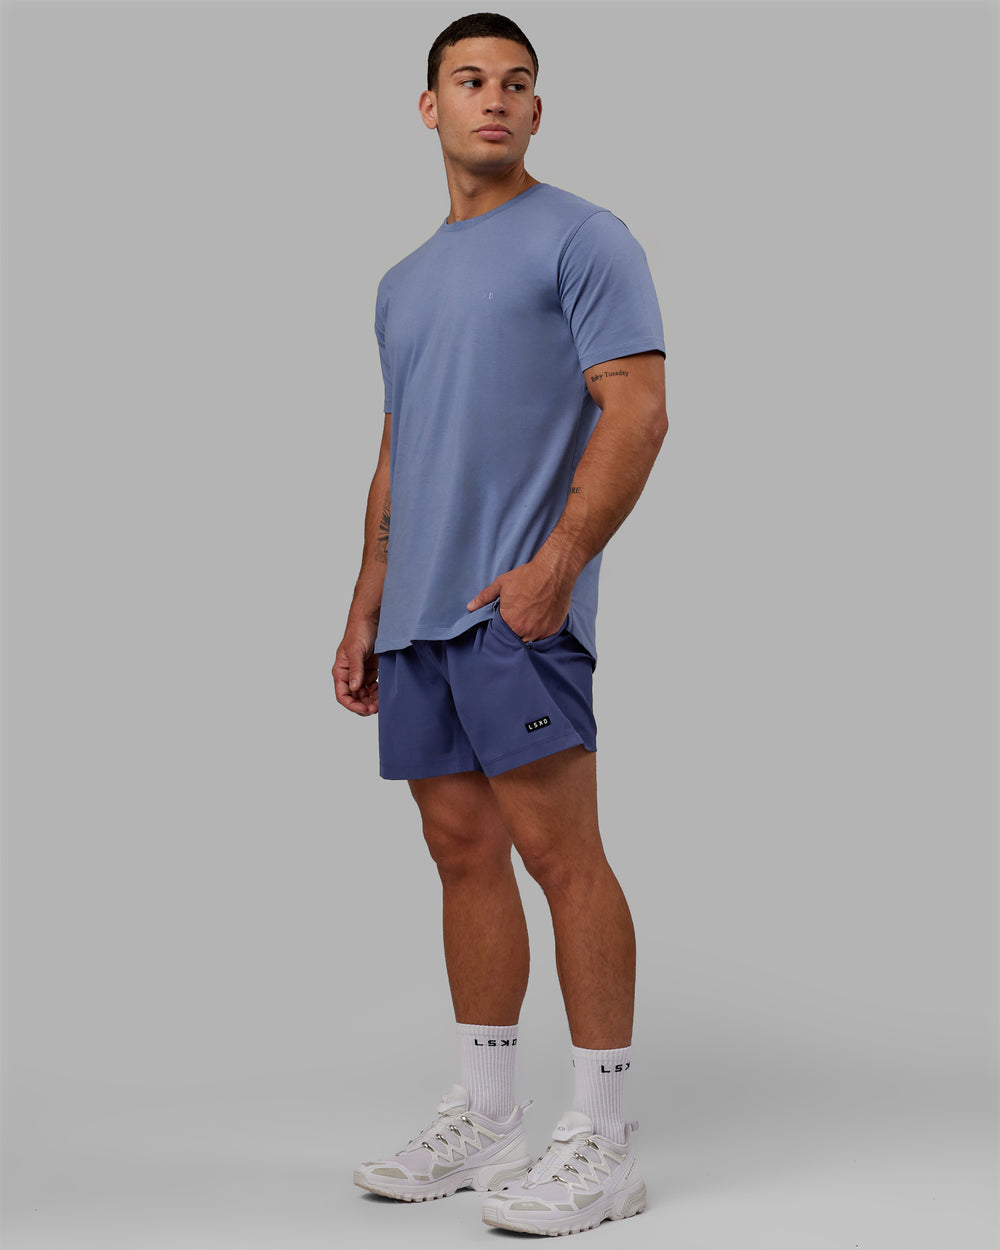 Man wearing Rep 5'' Performance Shorts - Future Dusk